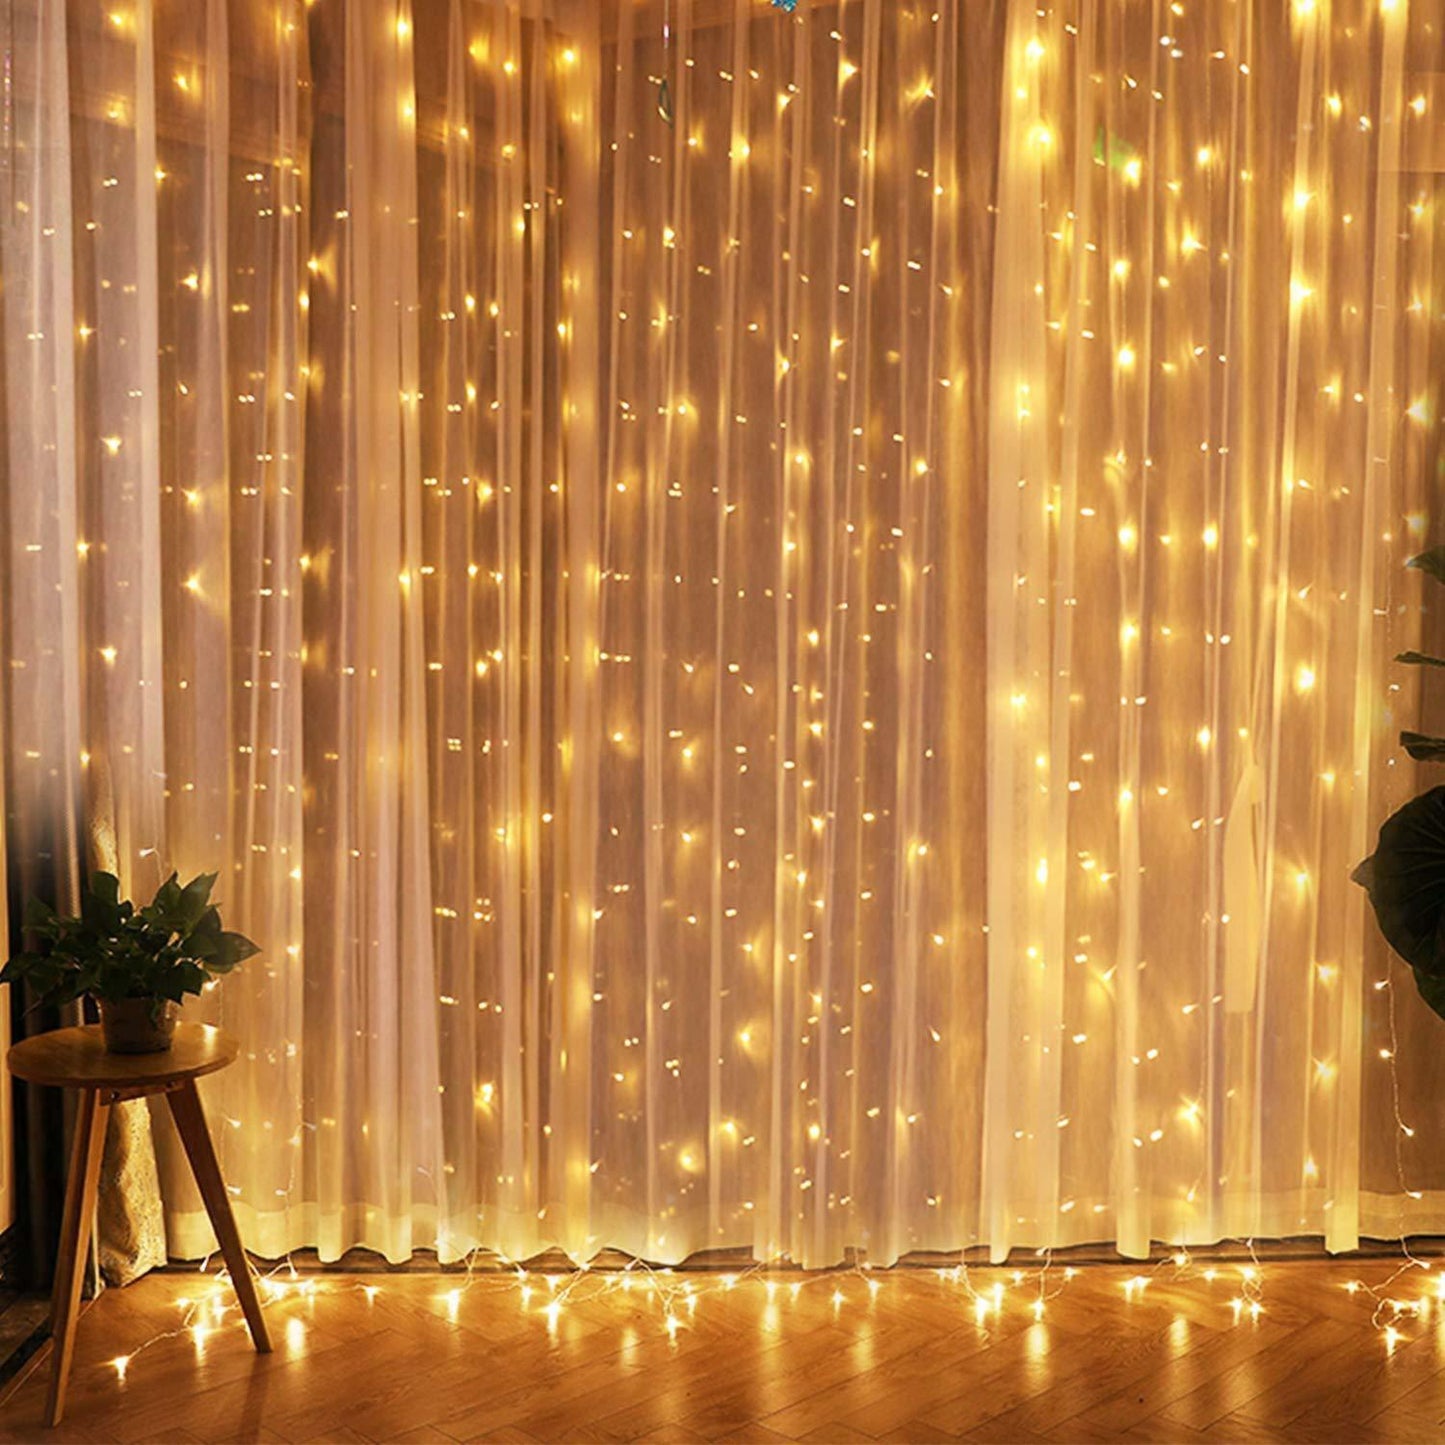 500 LED 100m Warm White String Fairy Lights Christmas Tree Xmas Party Wedding